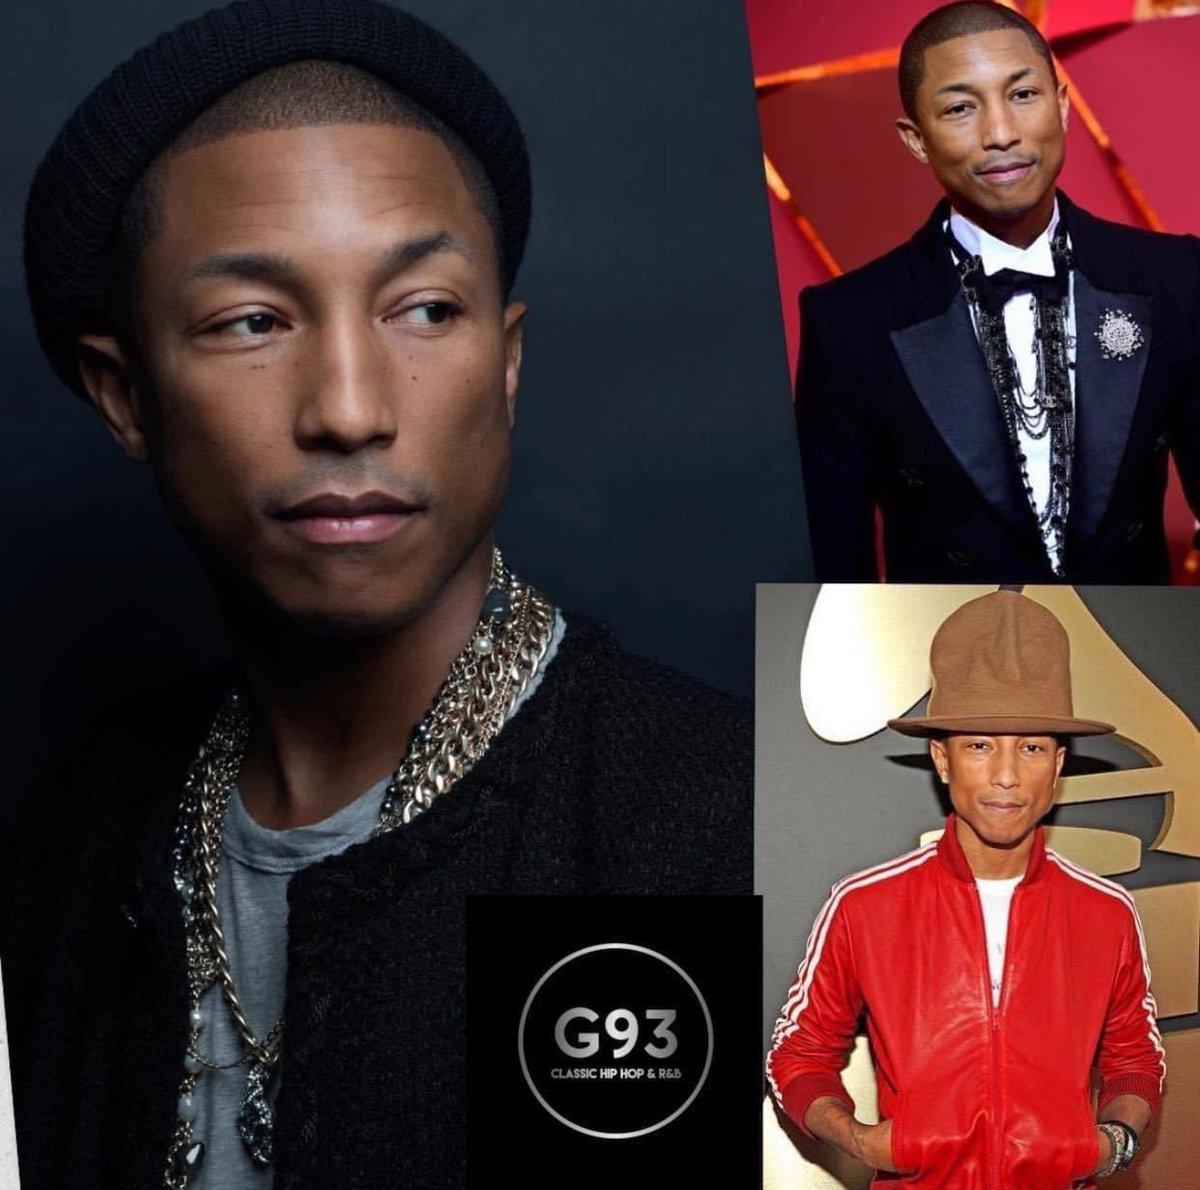 🎂🎈🎂🎈🎂 Happy Birthday #PharrellWilliams! #Pharrell Is 49 Today! #G93Radio @Pharrell